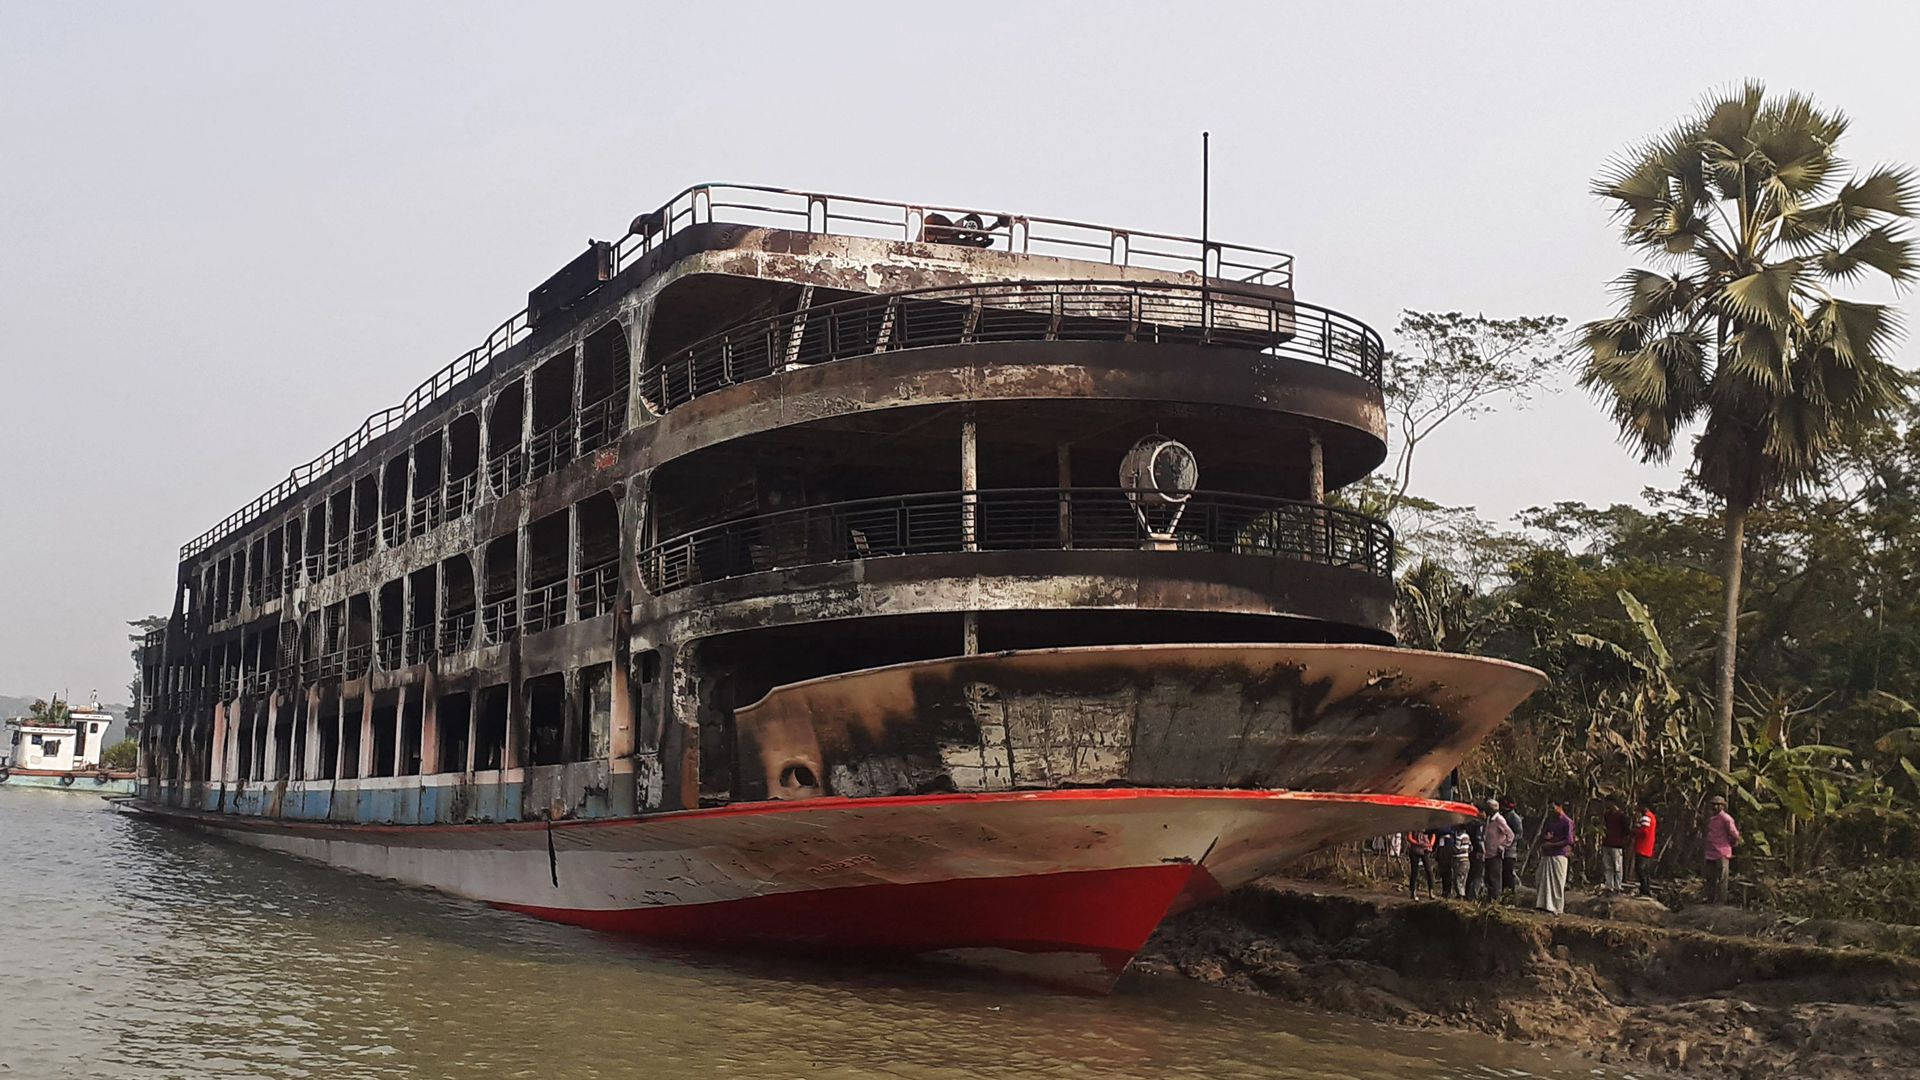 Bangladesh Ferry Fire Incident Background